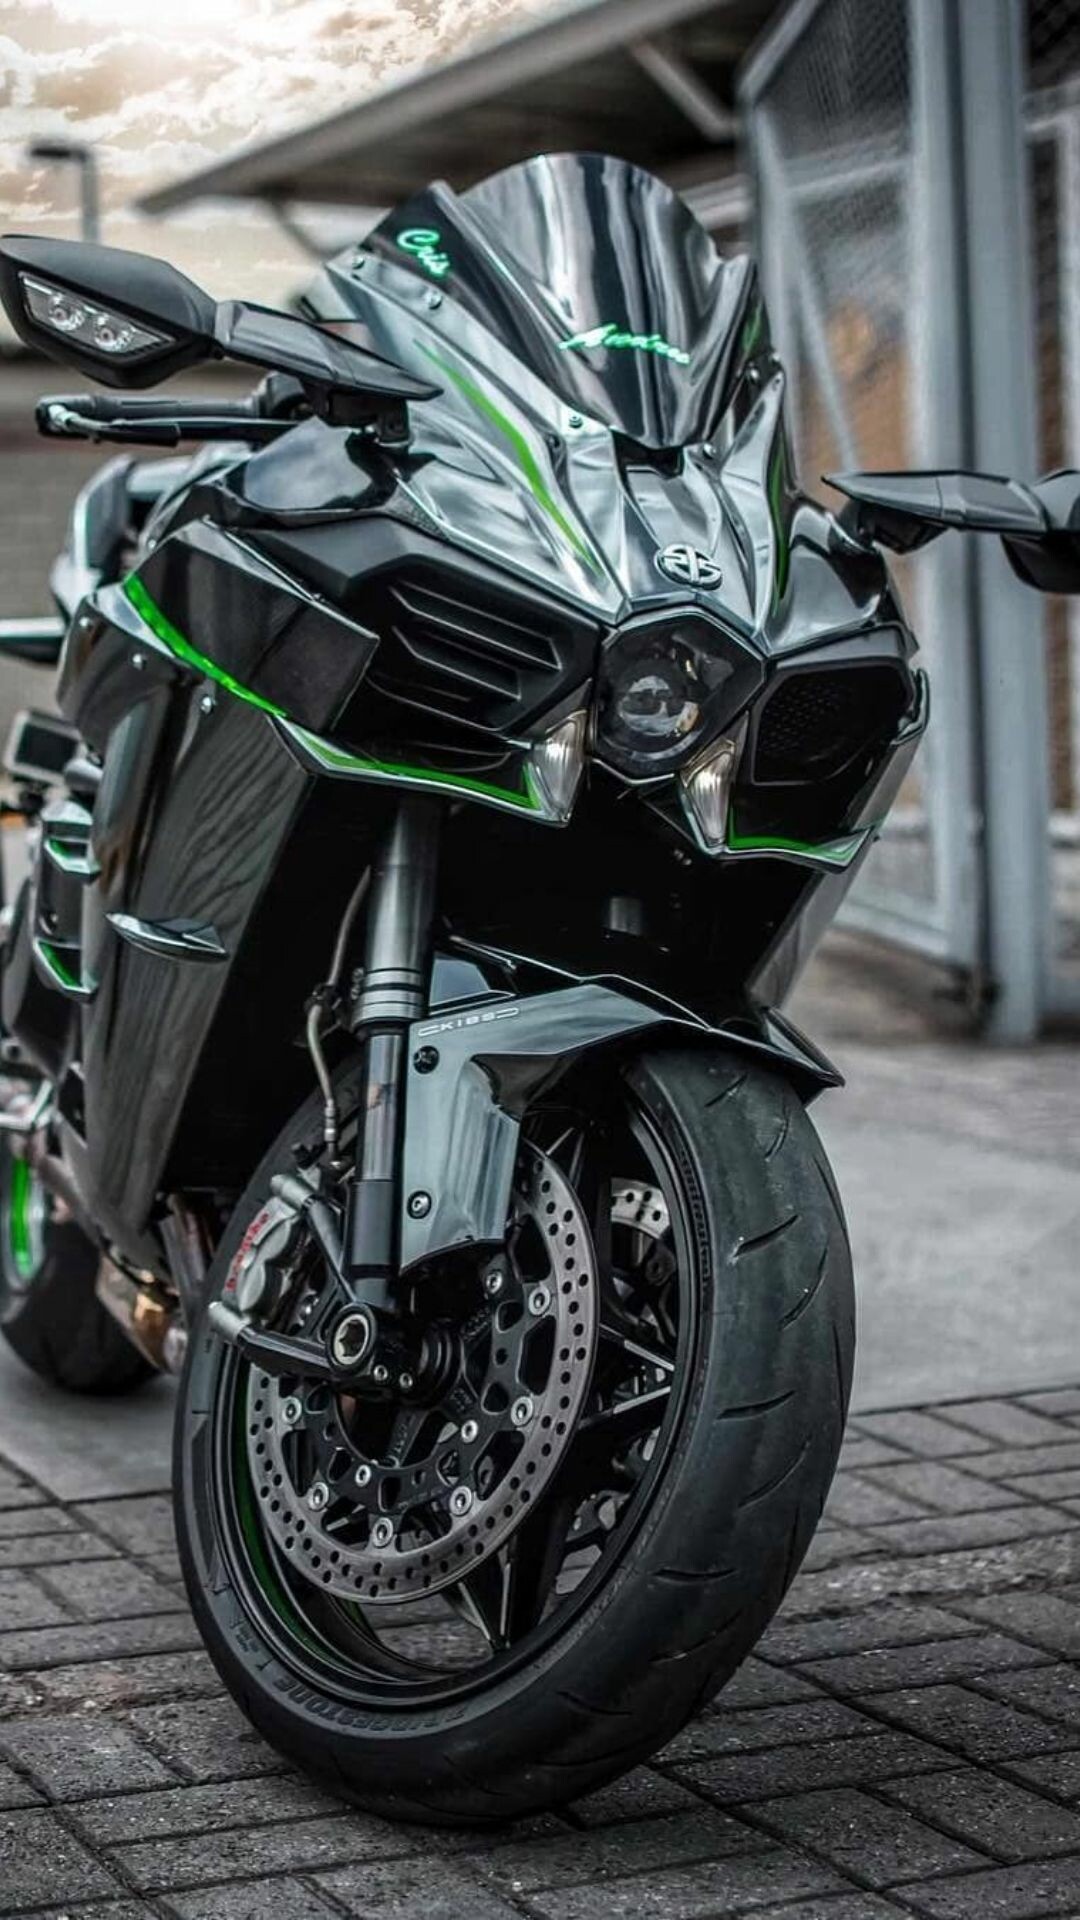 Kawasaki: Ninja H2, A supercharged supersport-class motorcycle in the Ninja series. 1080x1920 Full HD Wallpaper.